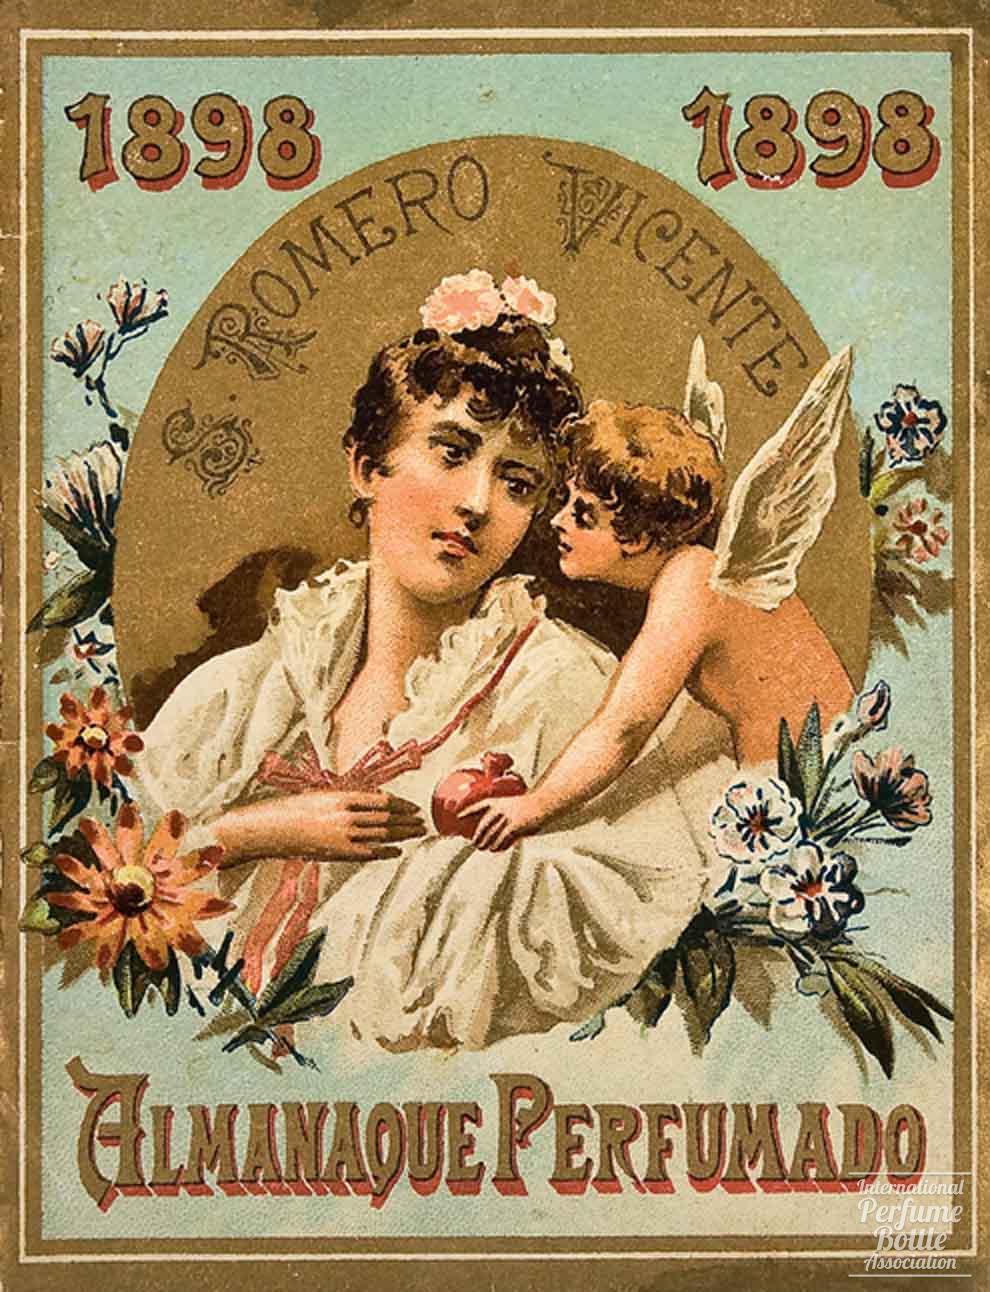 Calendar by Perfumeria Inglesa Romero Vicente - 1898